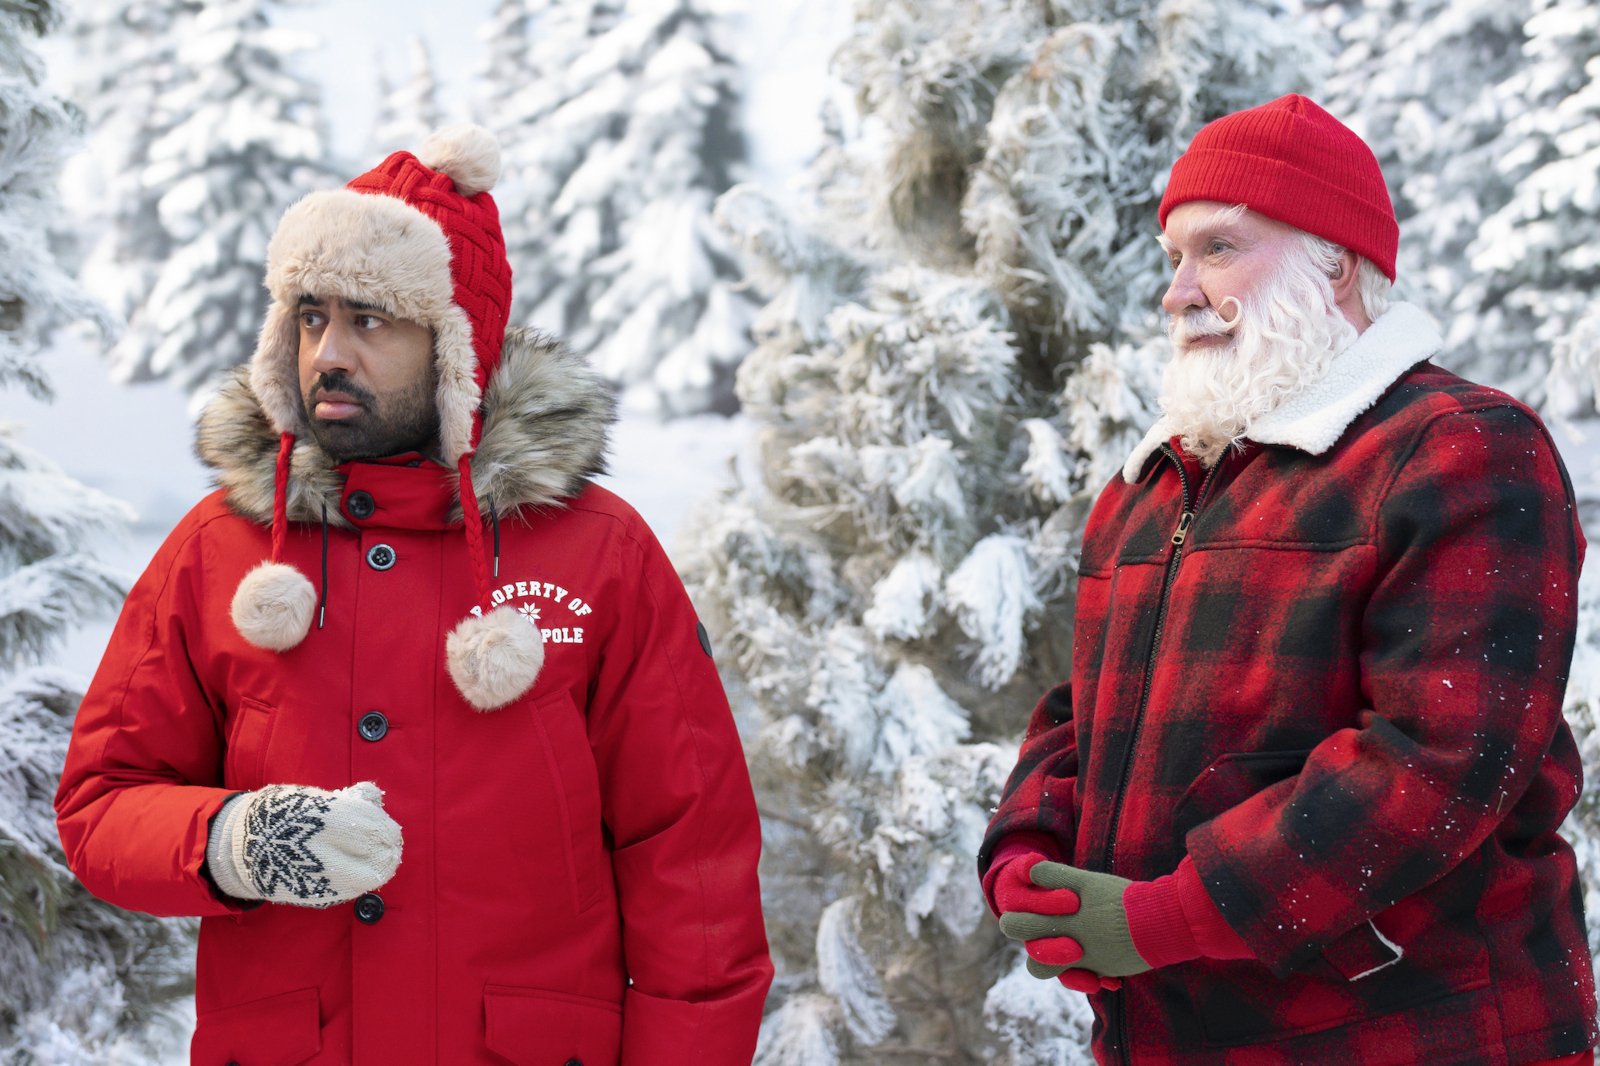 ‘The Santa Clauses’ Episode 3 Recap: Scott Calvin Auditions Peyton Manning To Be Santa Claus